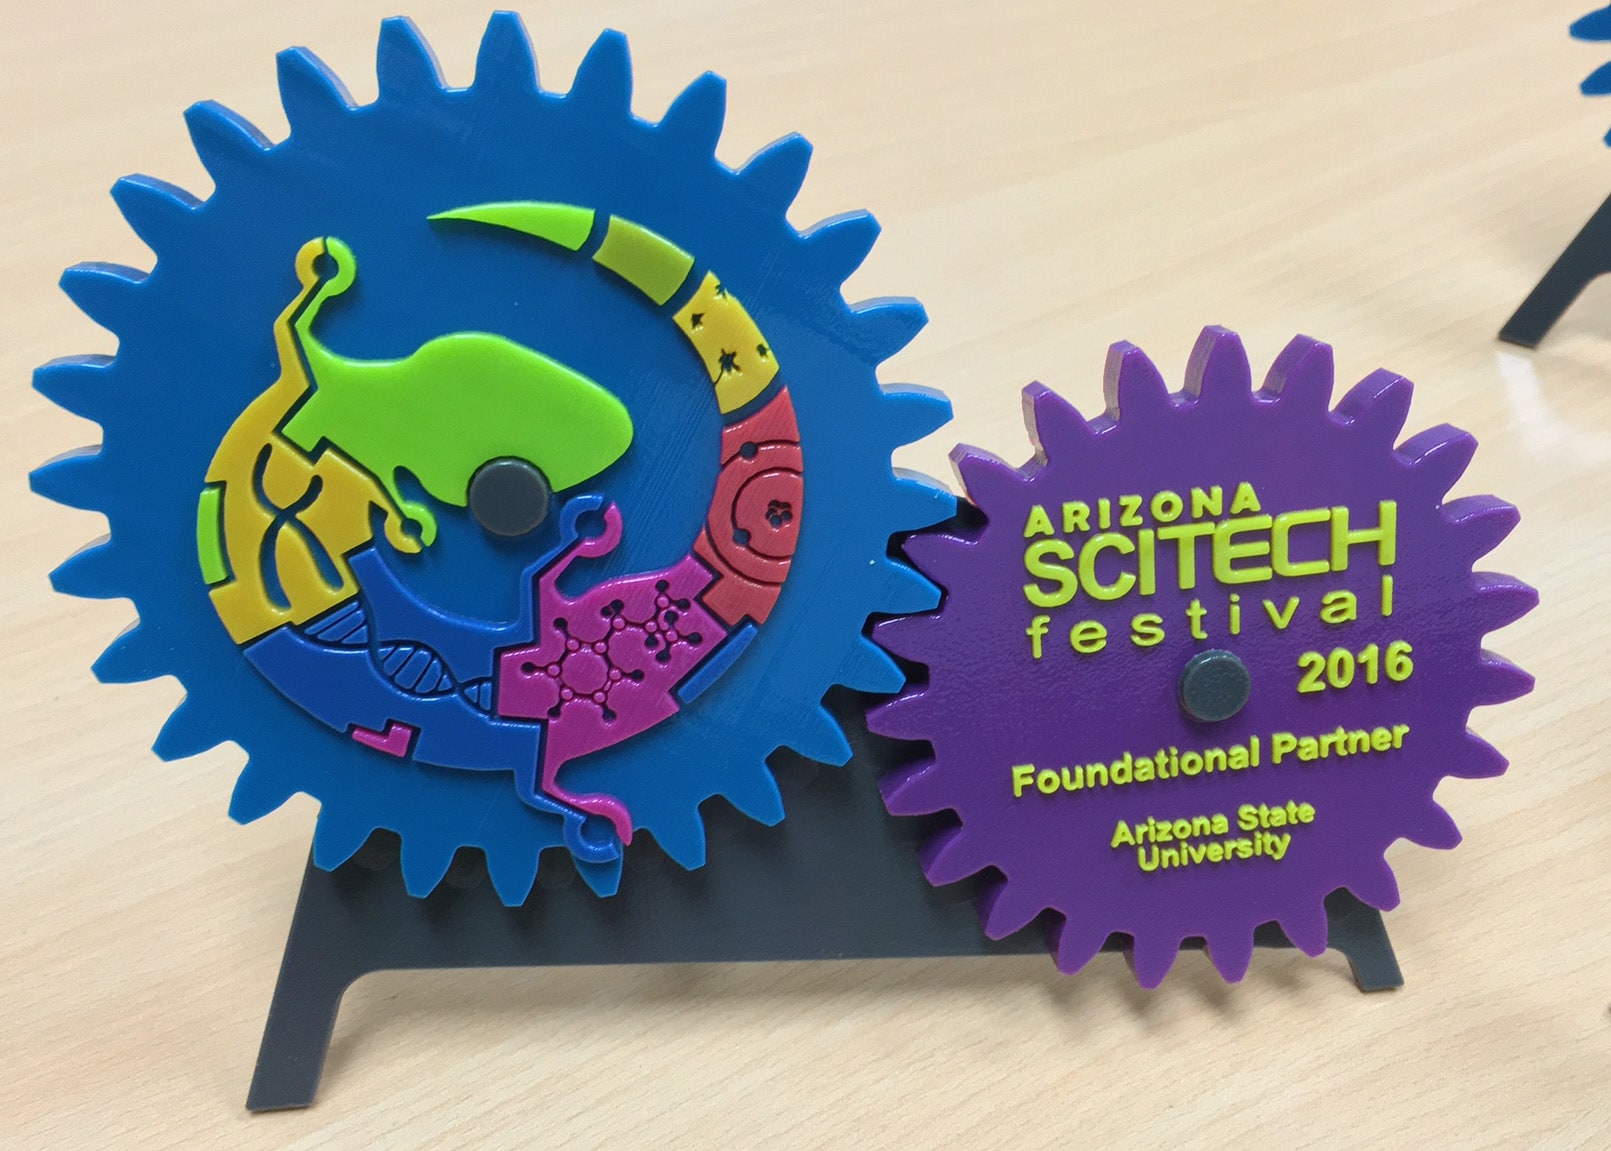 SciTech-Festival-Award-2016-1